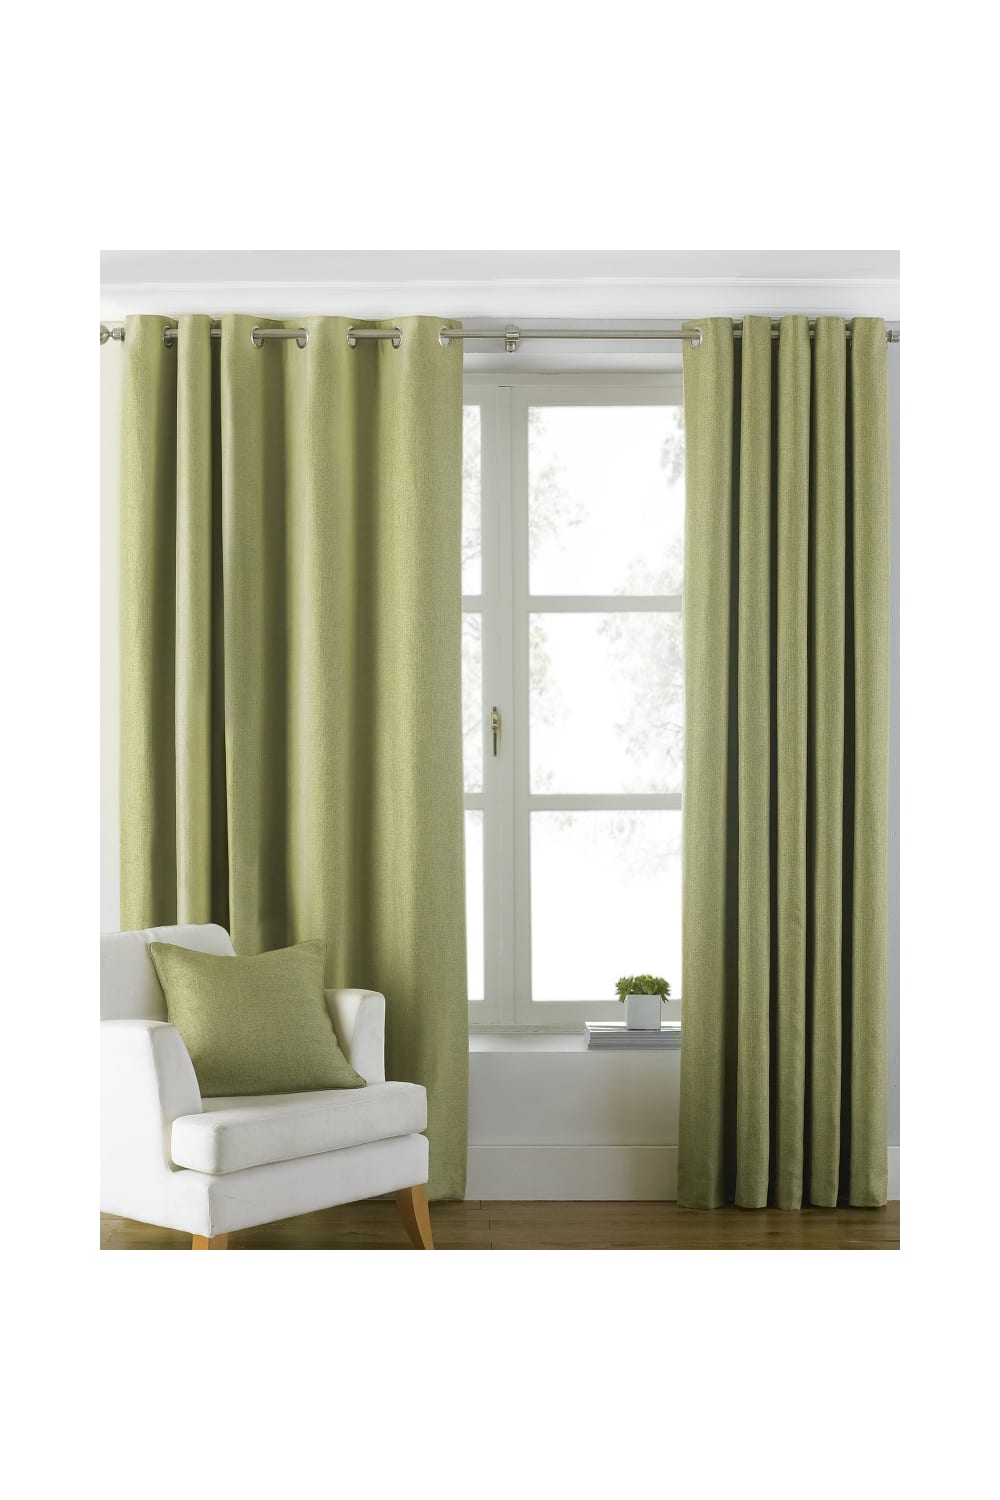 Riva Home Atlantic Eyelet Ringtop Curtains (Green) (46 x 72in)